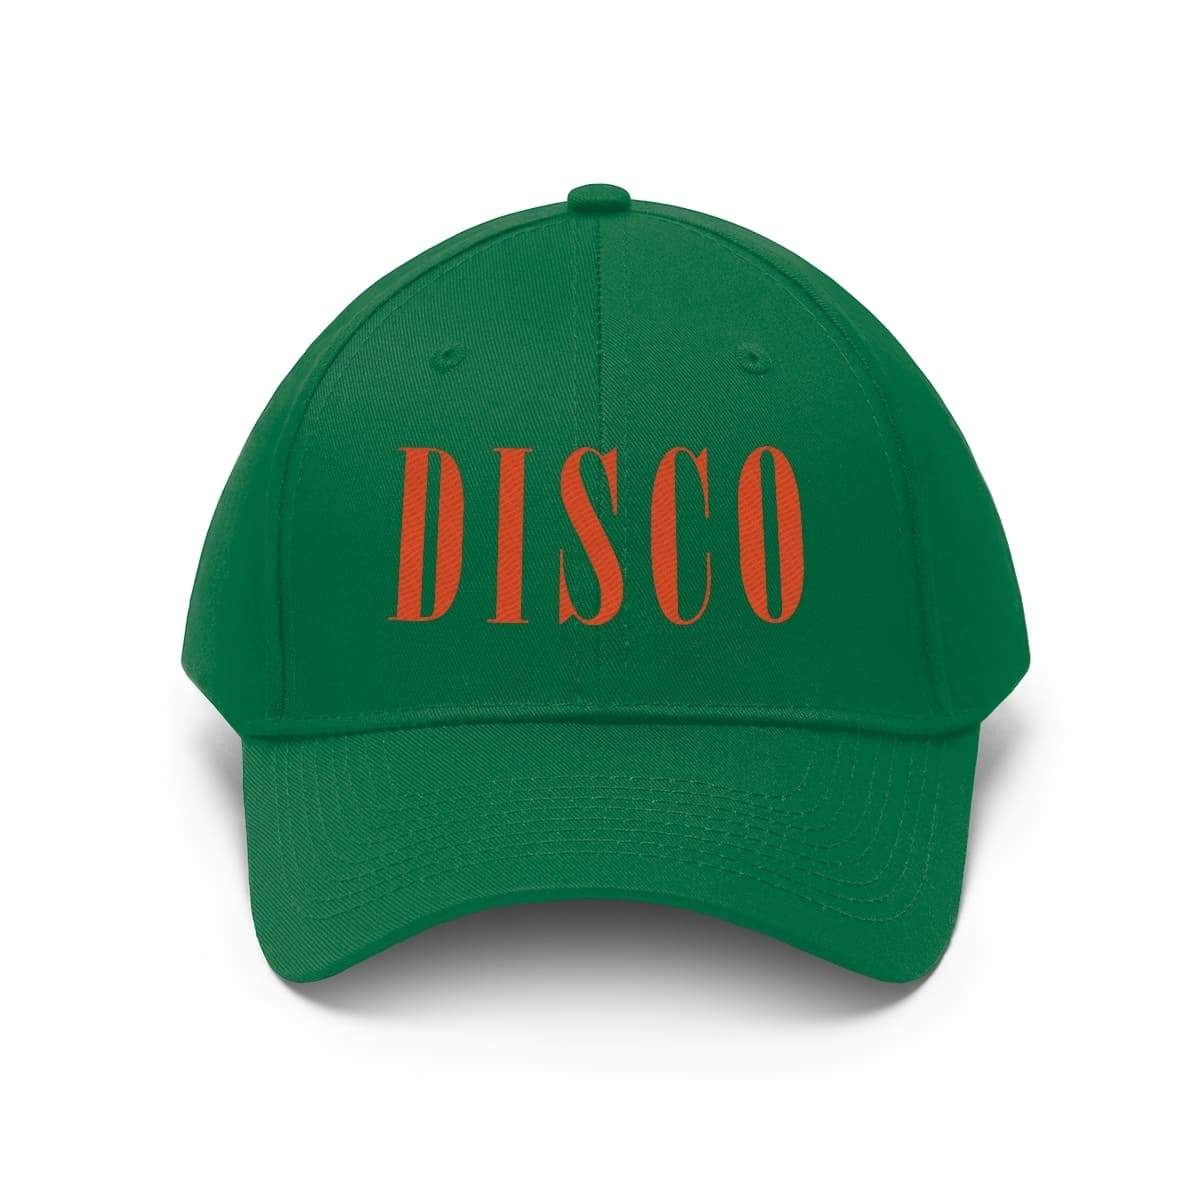 Midnight LAW USA Hat Disco Classic Dad Hat